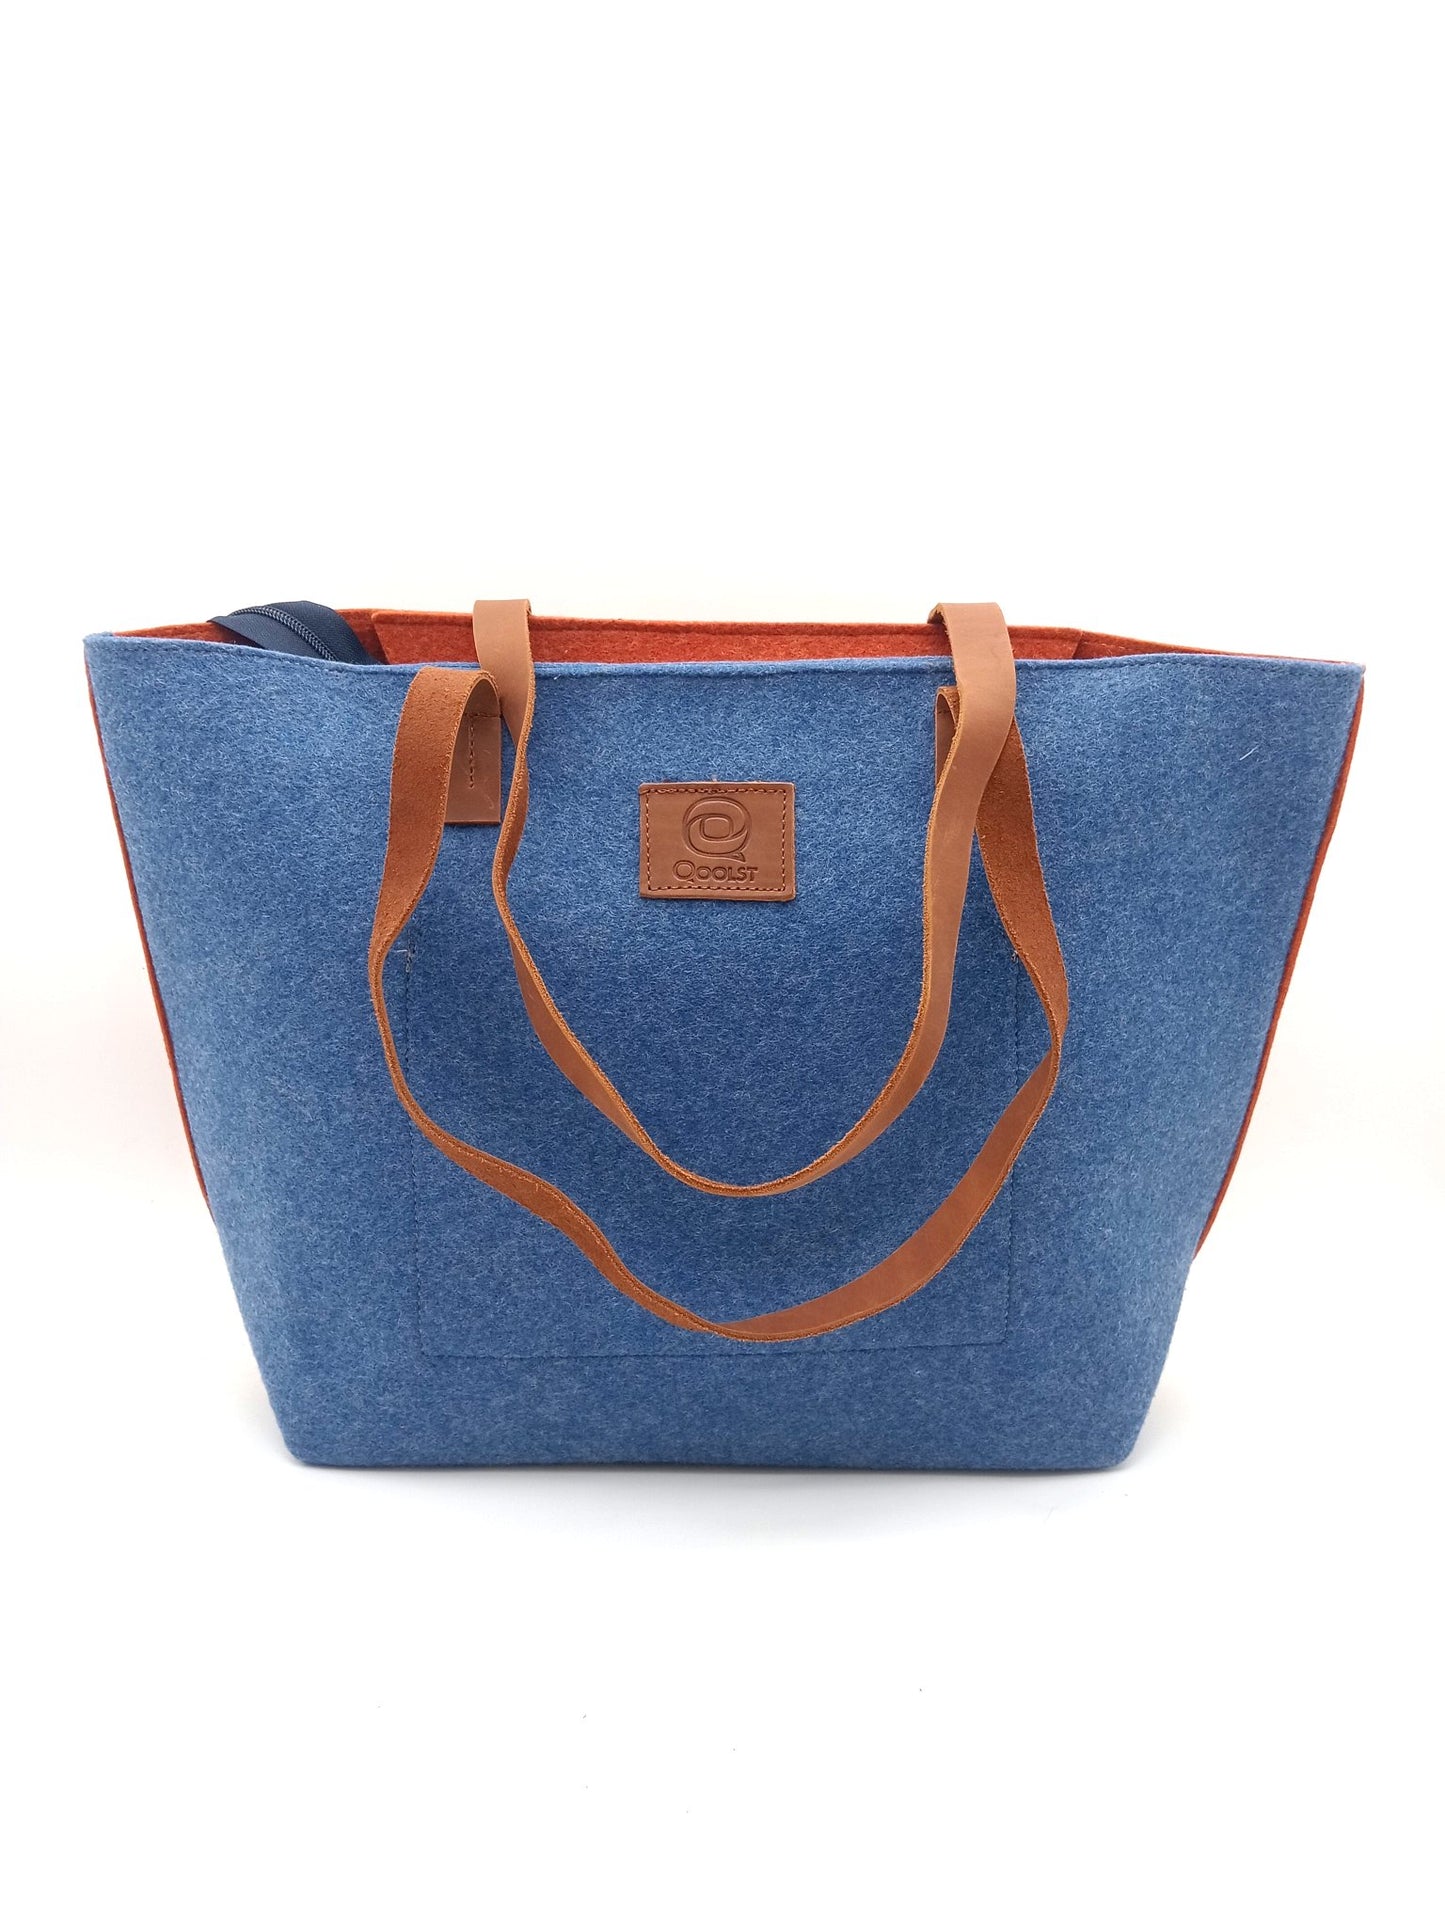 Women's shoulder and hand shopper bag Qoolst Bicolor Recycled Felt 